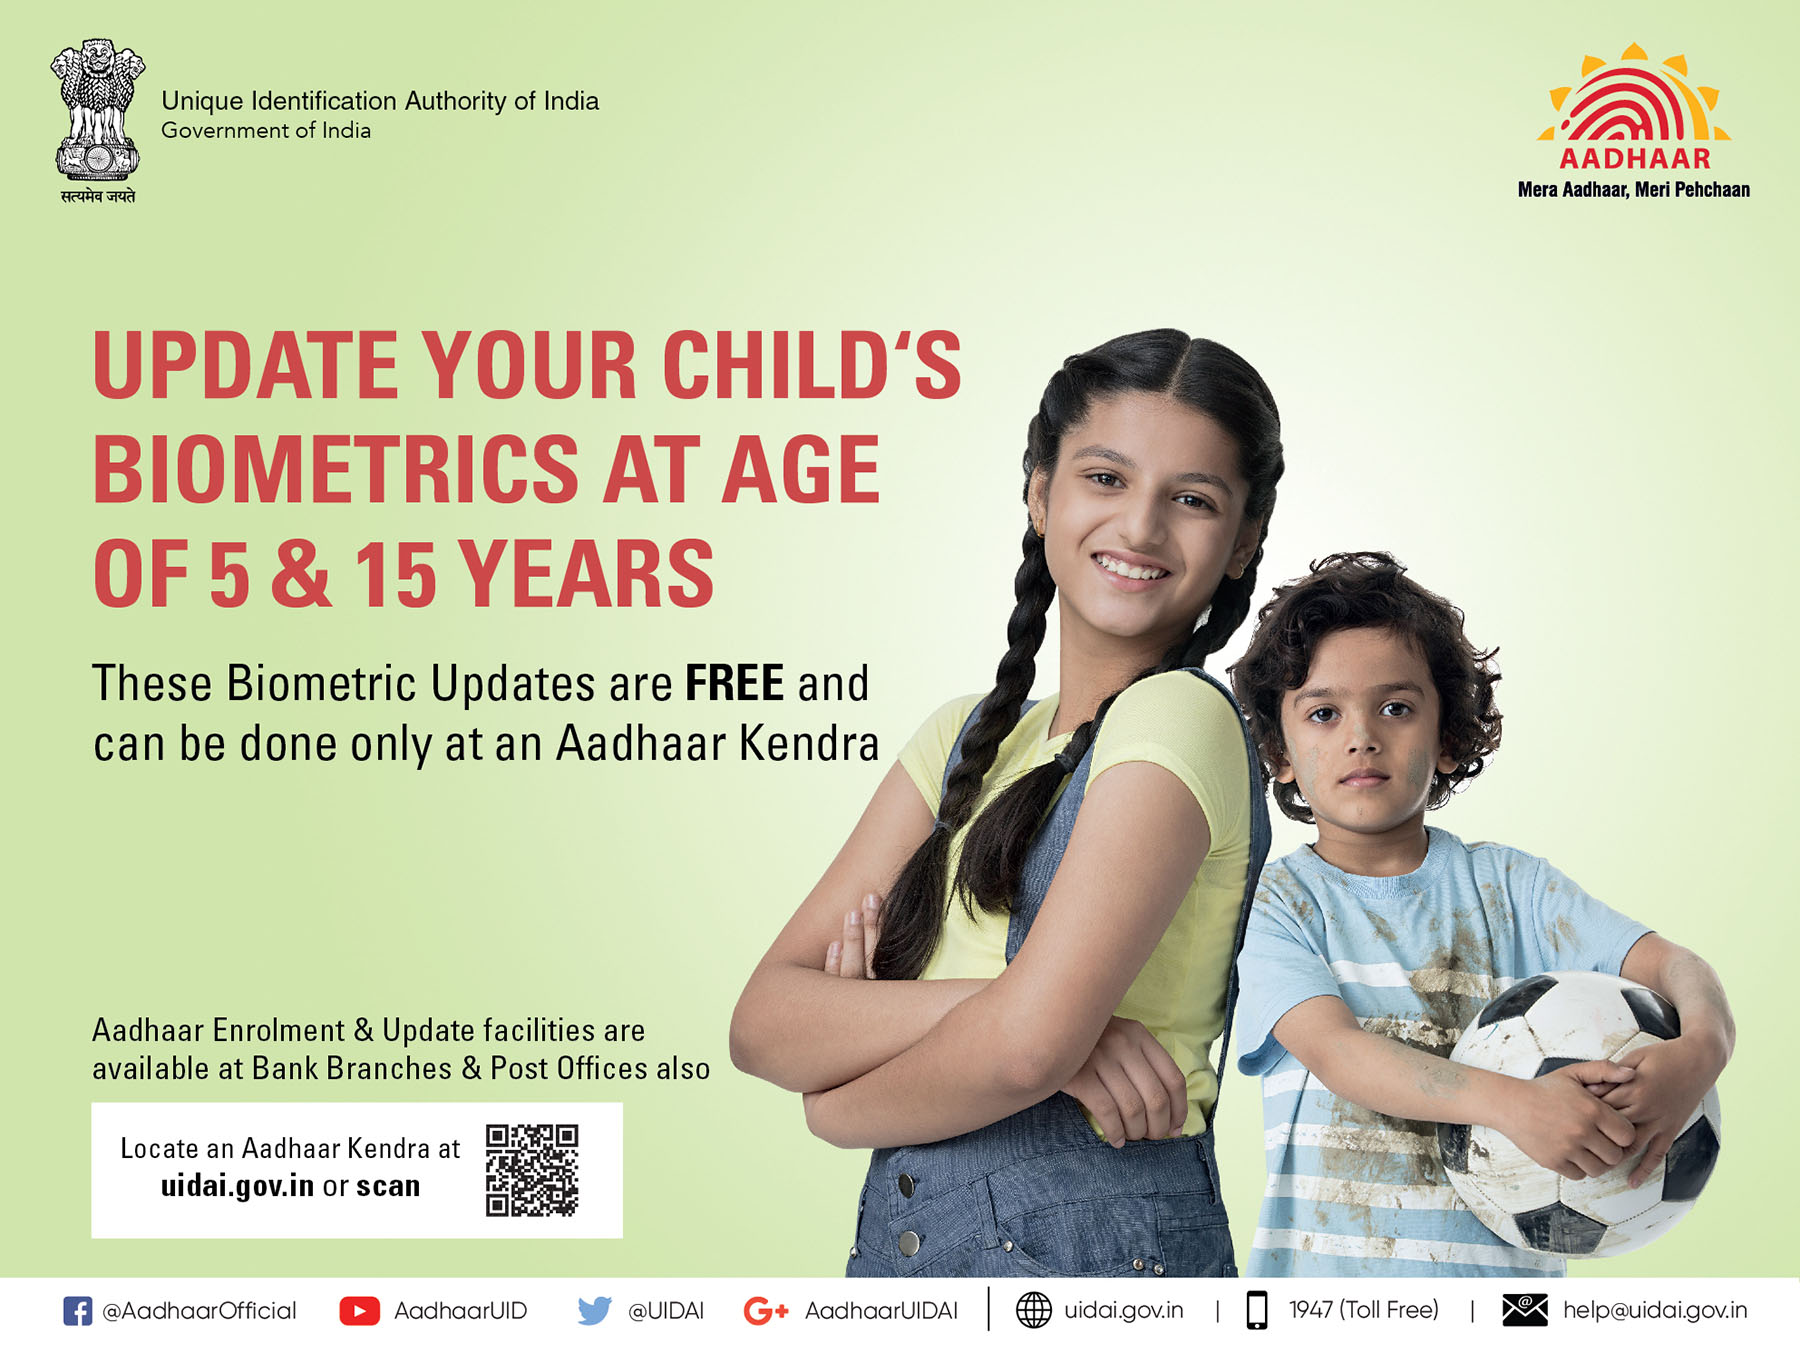 Update your child’s biometrics at age 5 & 15 